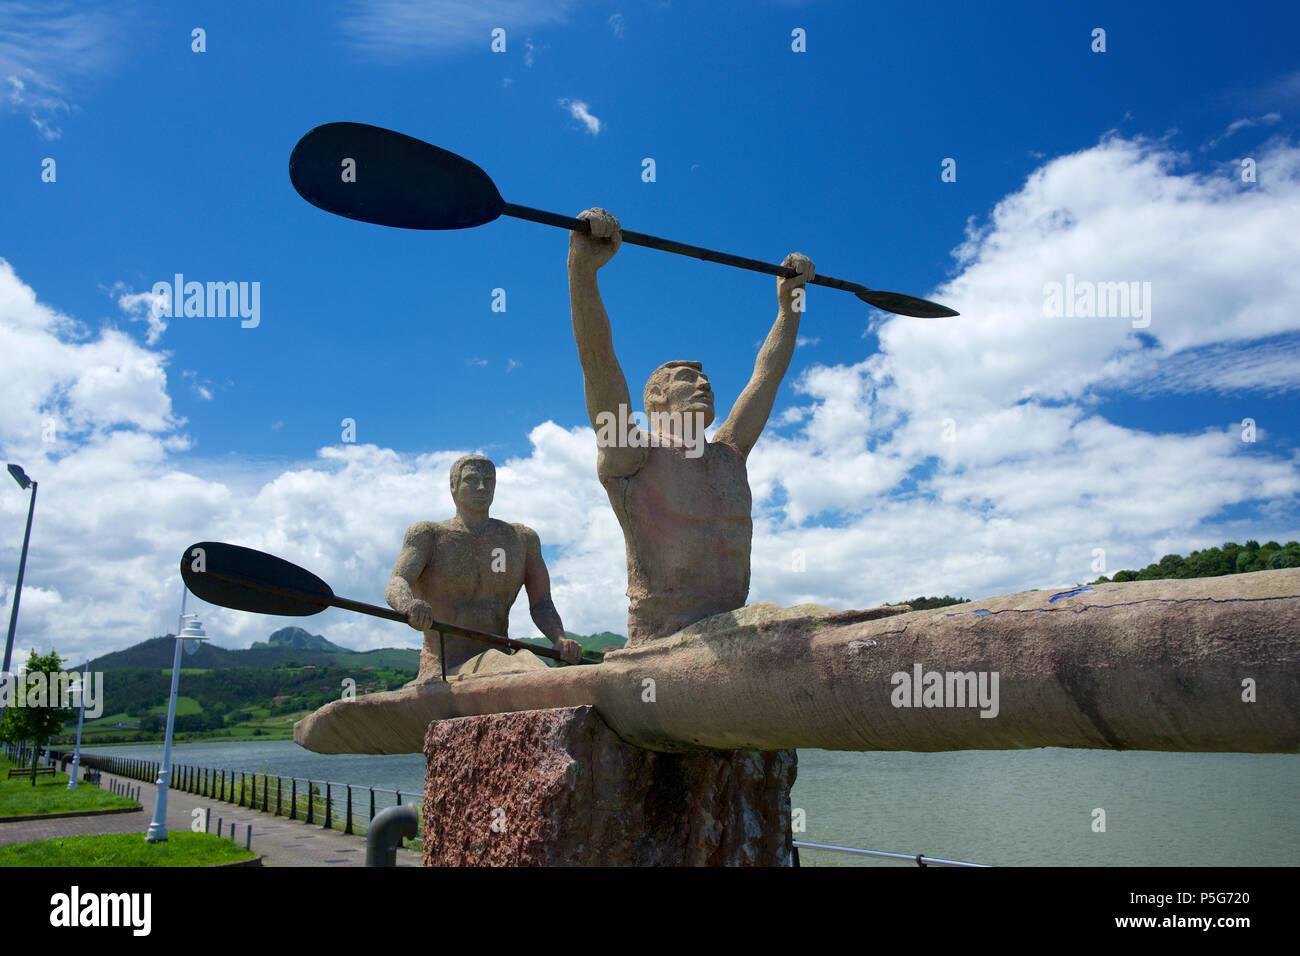 Sculpture representing local canoe event in Ribadesella, Asturias, N Spain Stock Photo